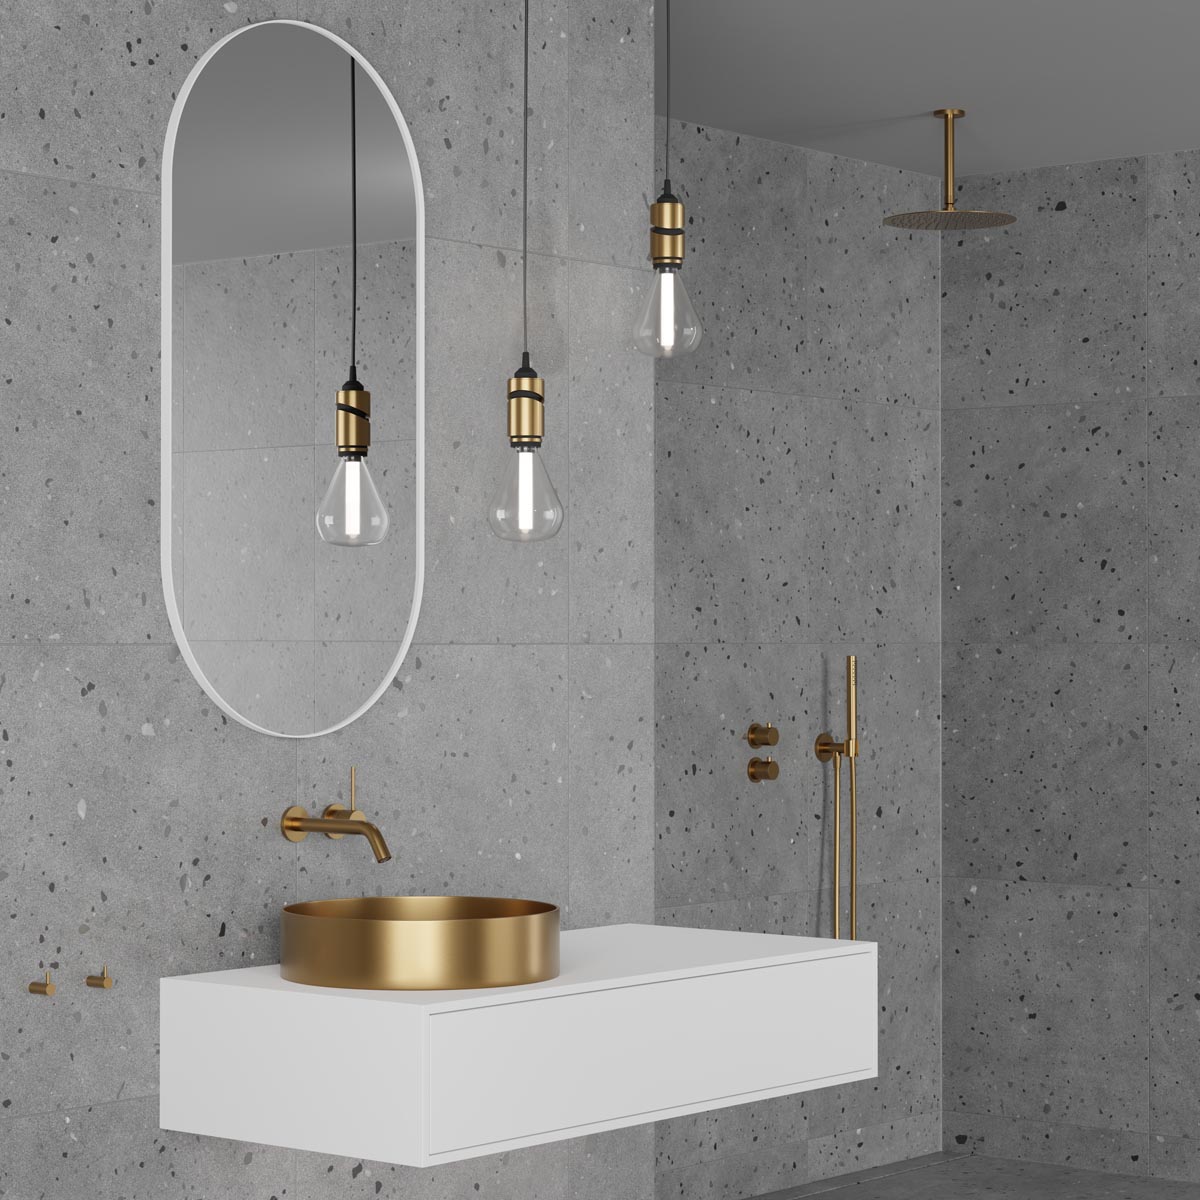 Scandtap Bathroom Concepts Solid S1000